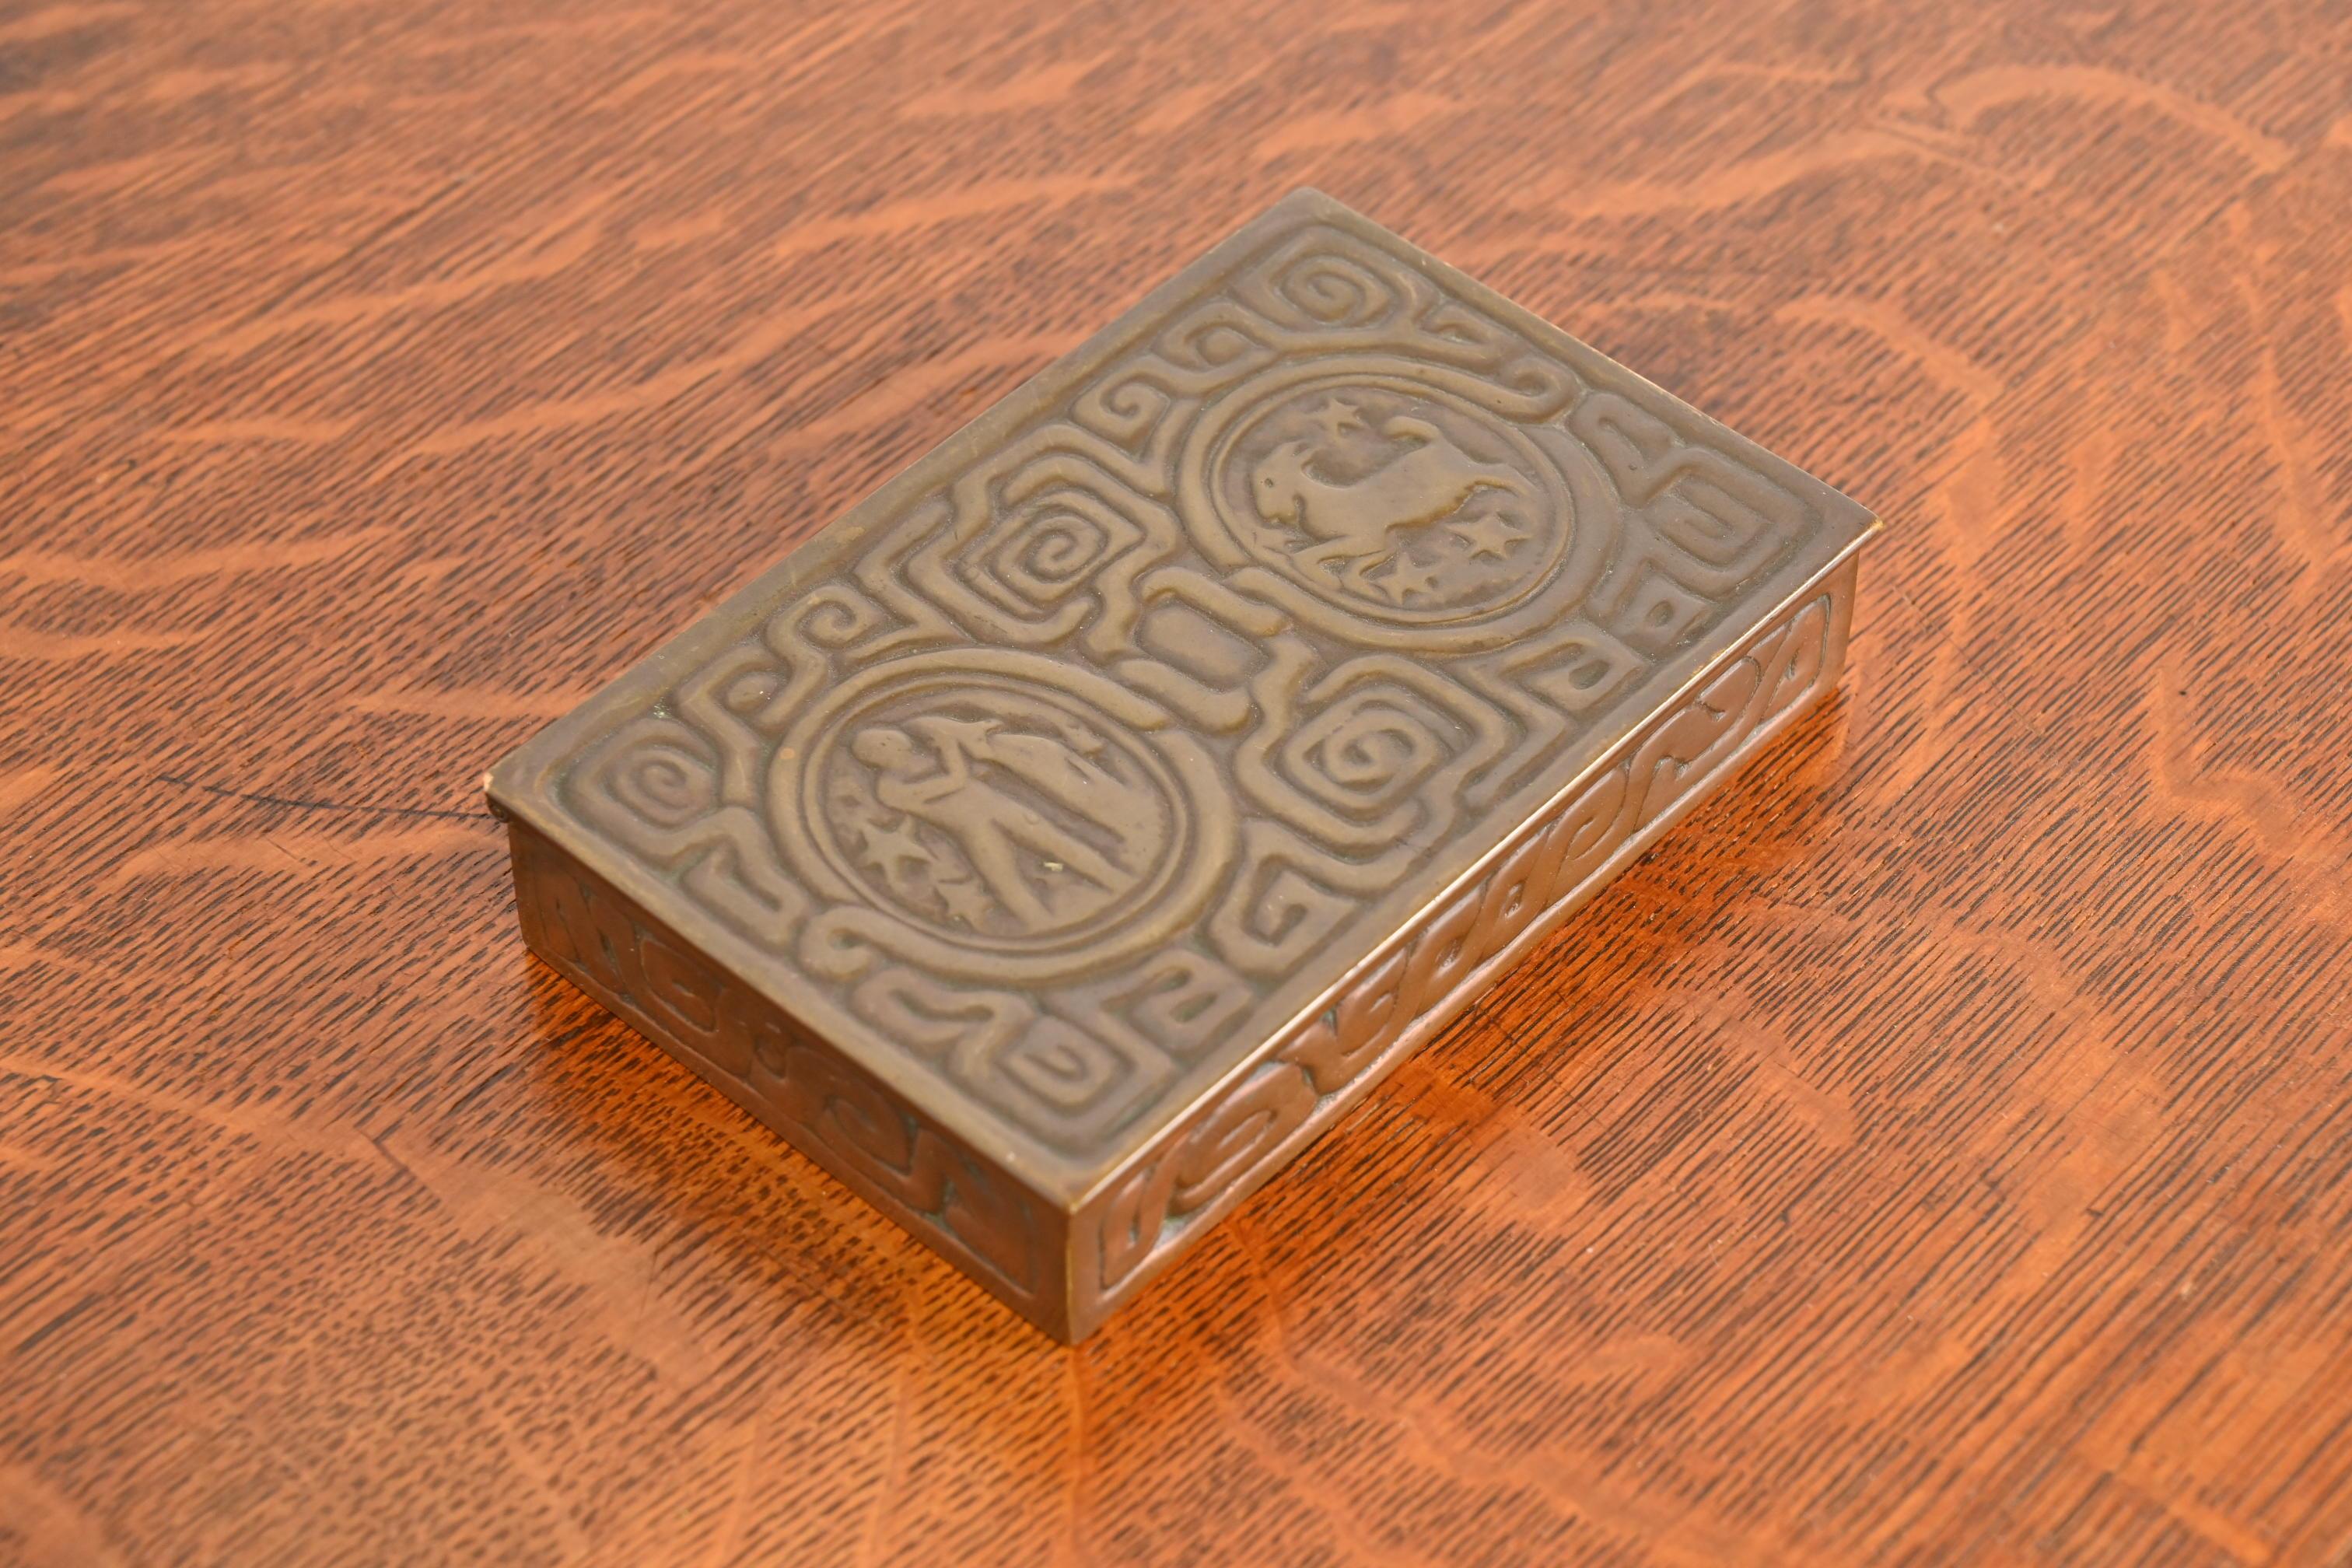 Tiffany Studios New York Zodiac Bronze Box For Sale 1